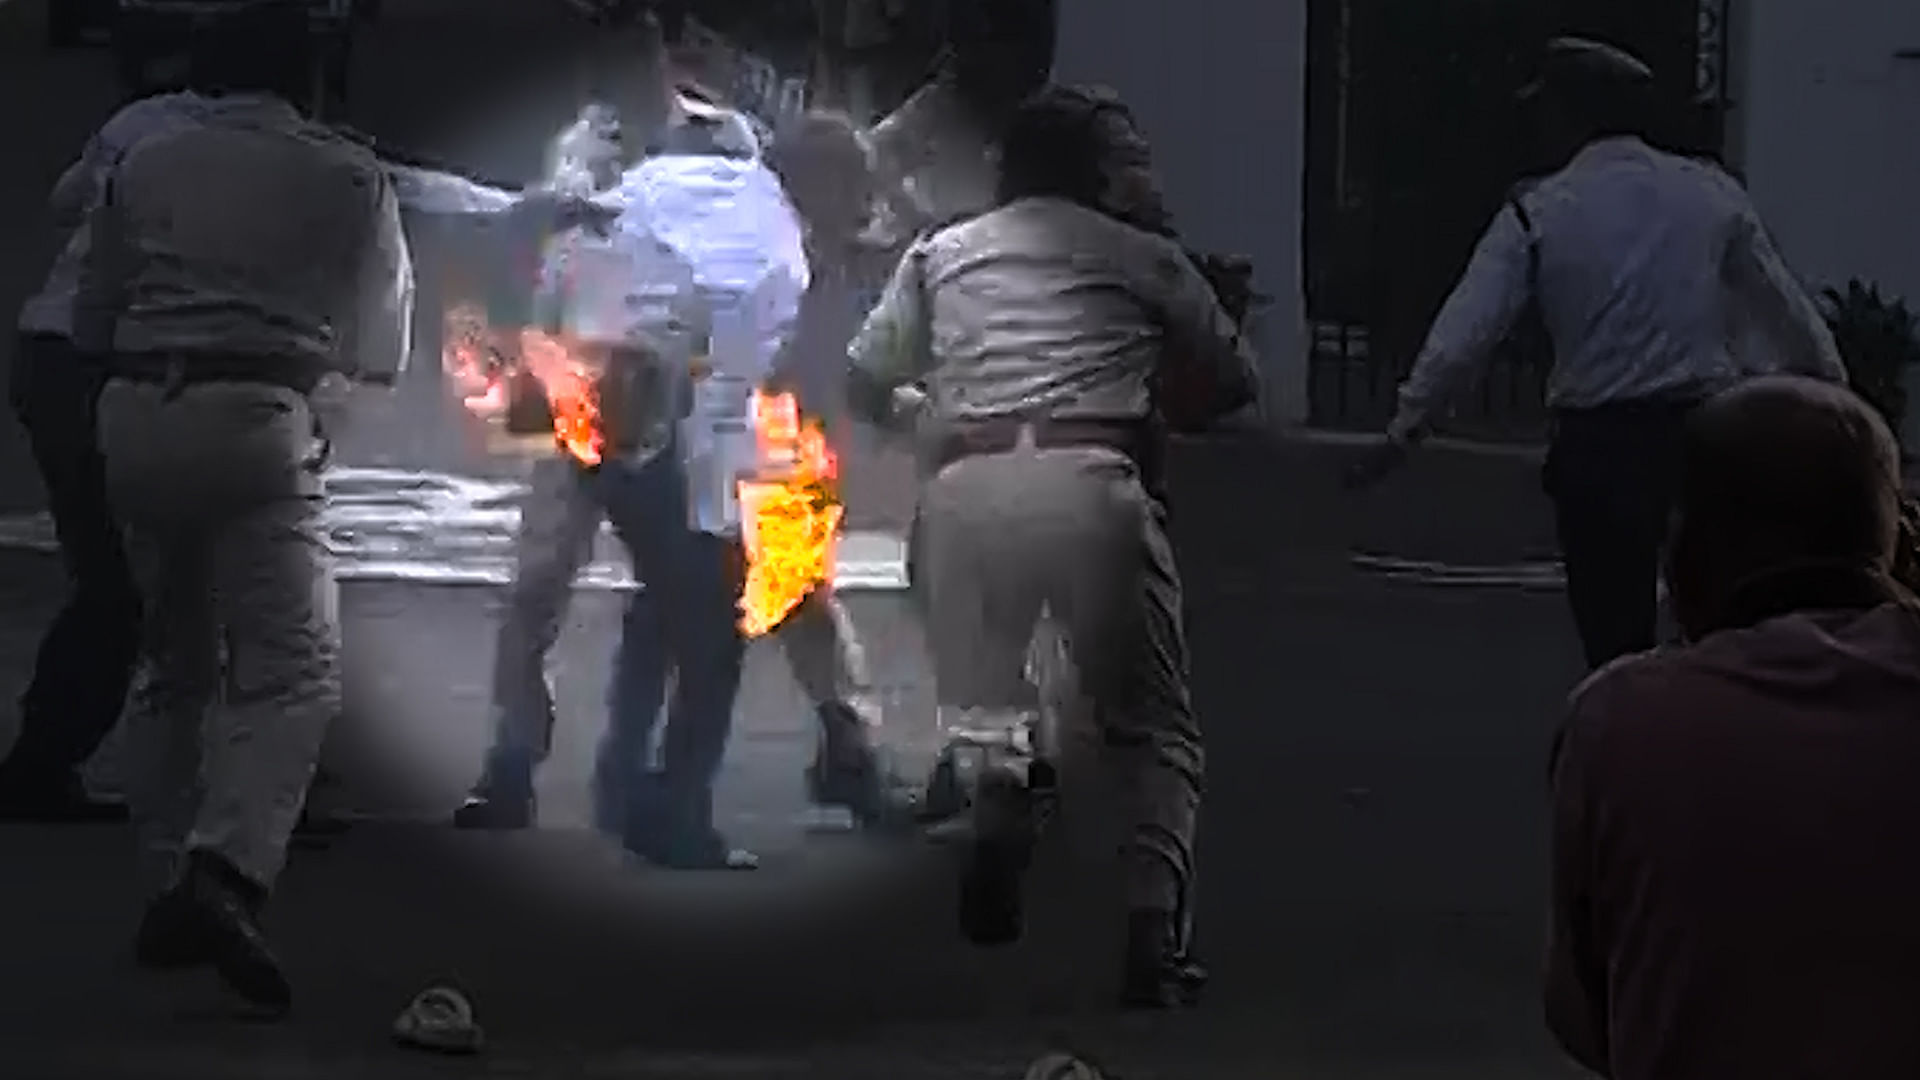 RTI activist has not suffered any major burns. (Photo: ANI screengrab)